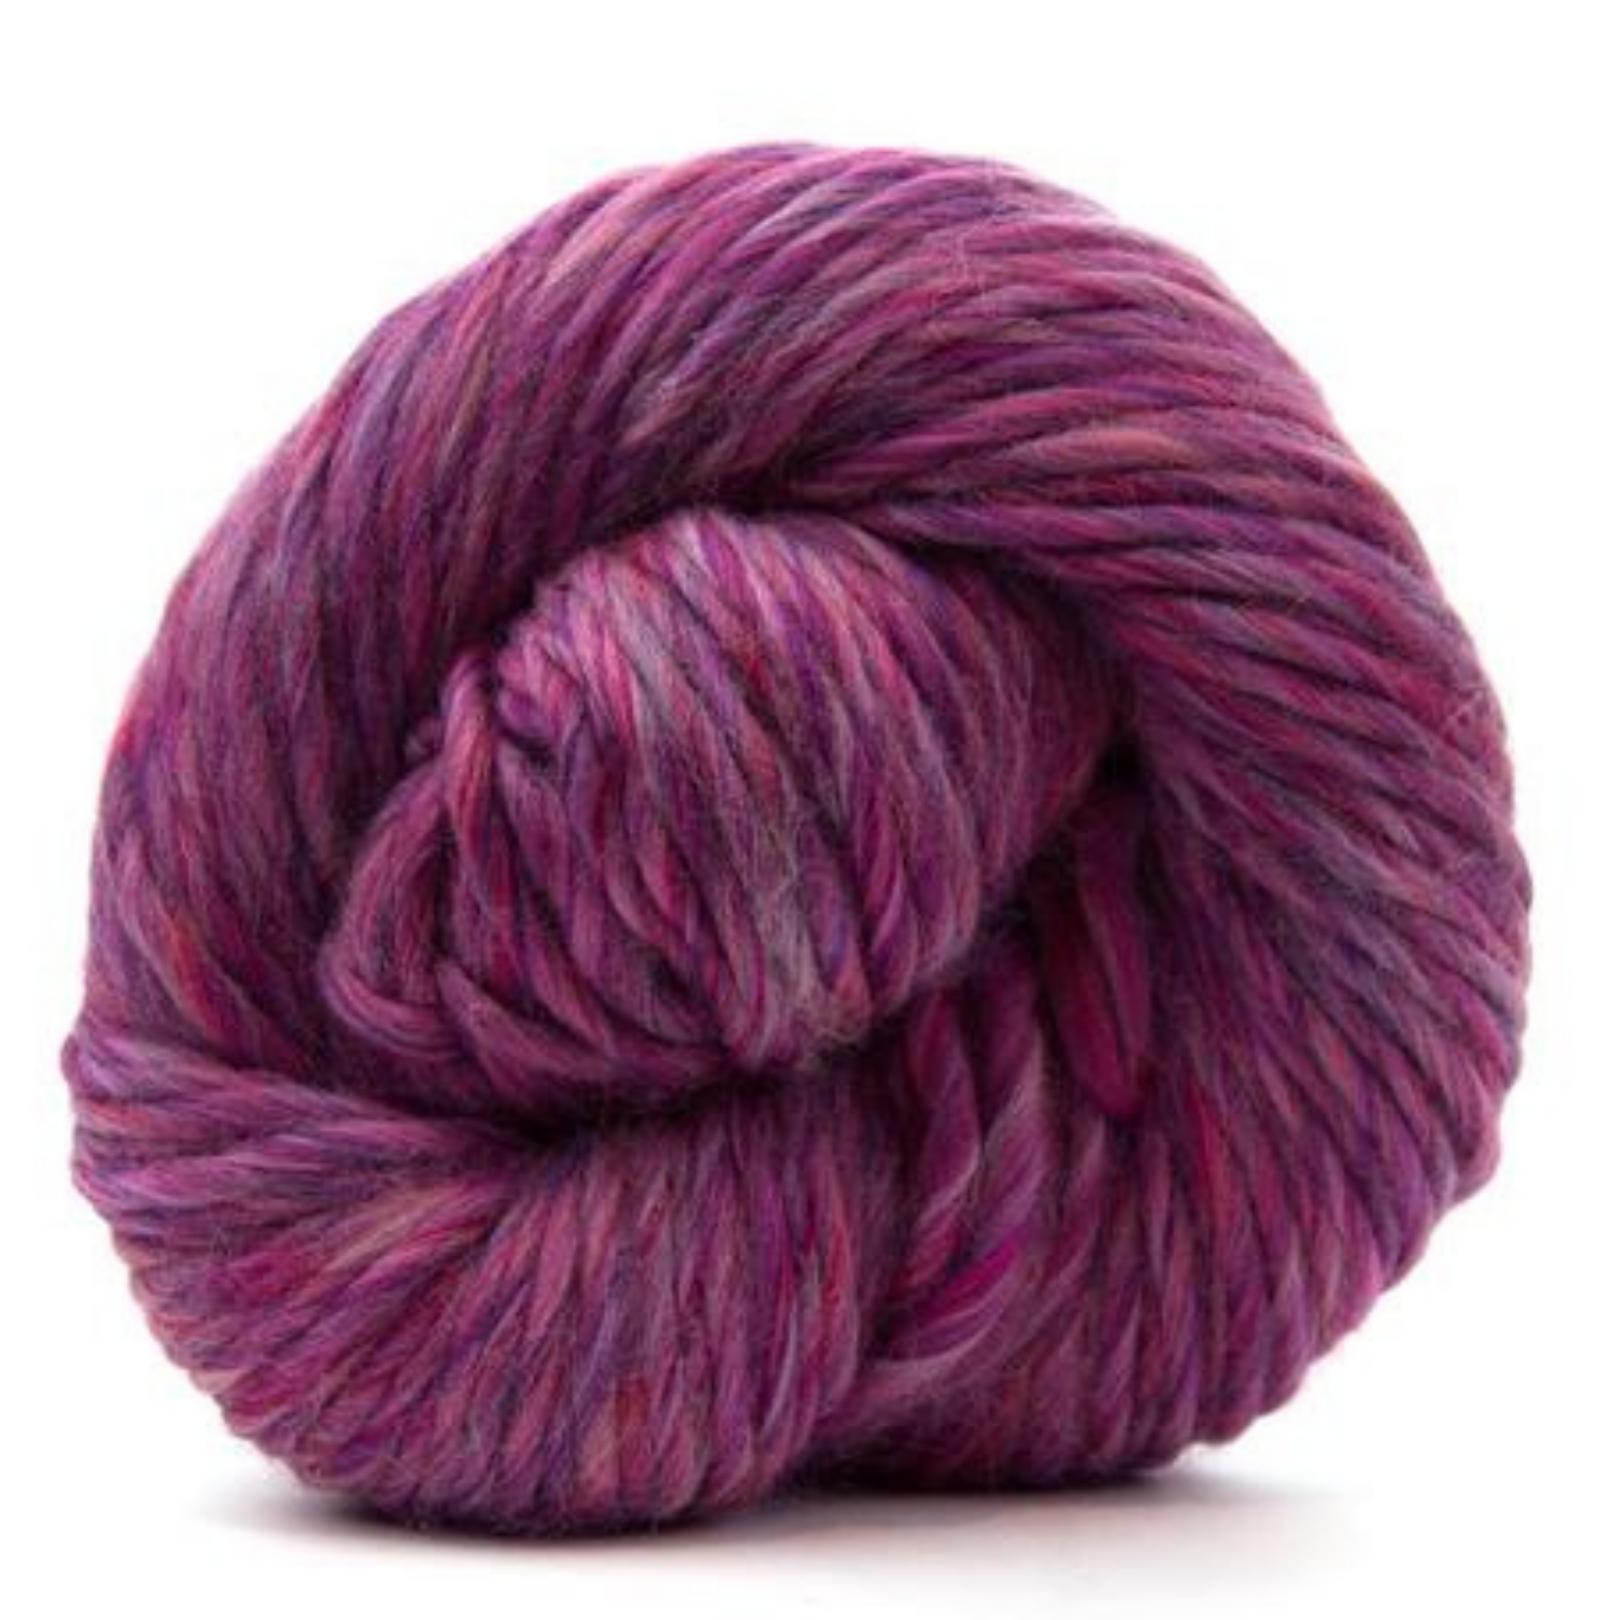 Premium Super Bulky (Chunky) Weight Multicolored Merino Yarn-Yarn-Revolution Fibers-Whisper Pink-Revolution Fibers